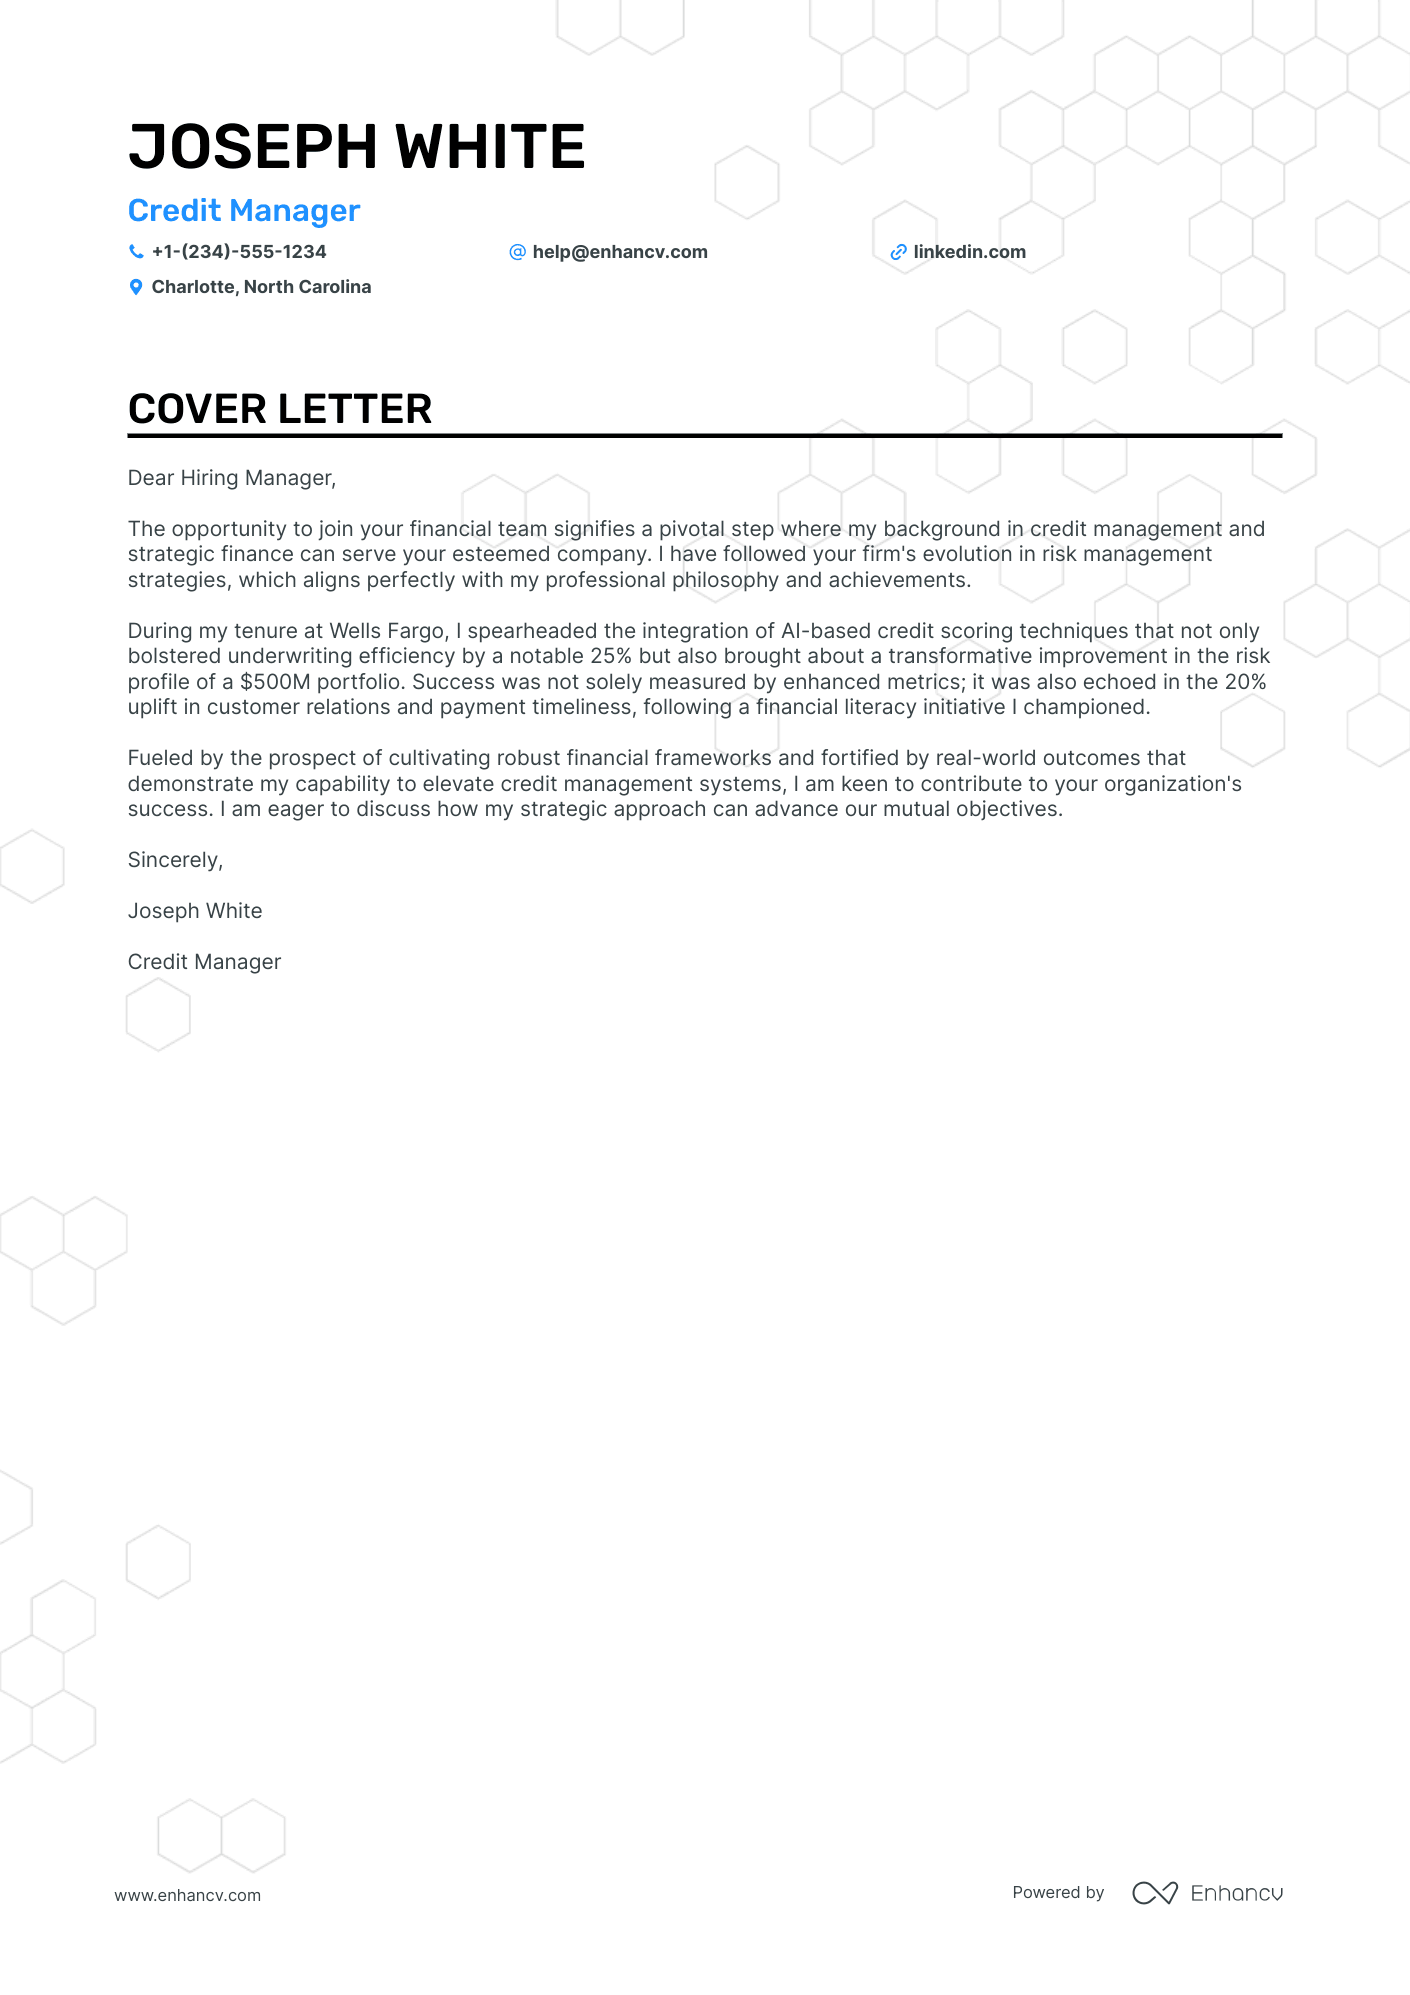 cover letter example for finance job